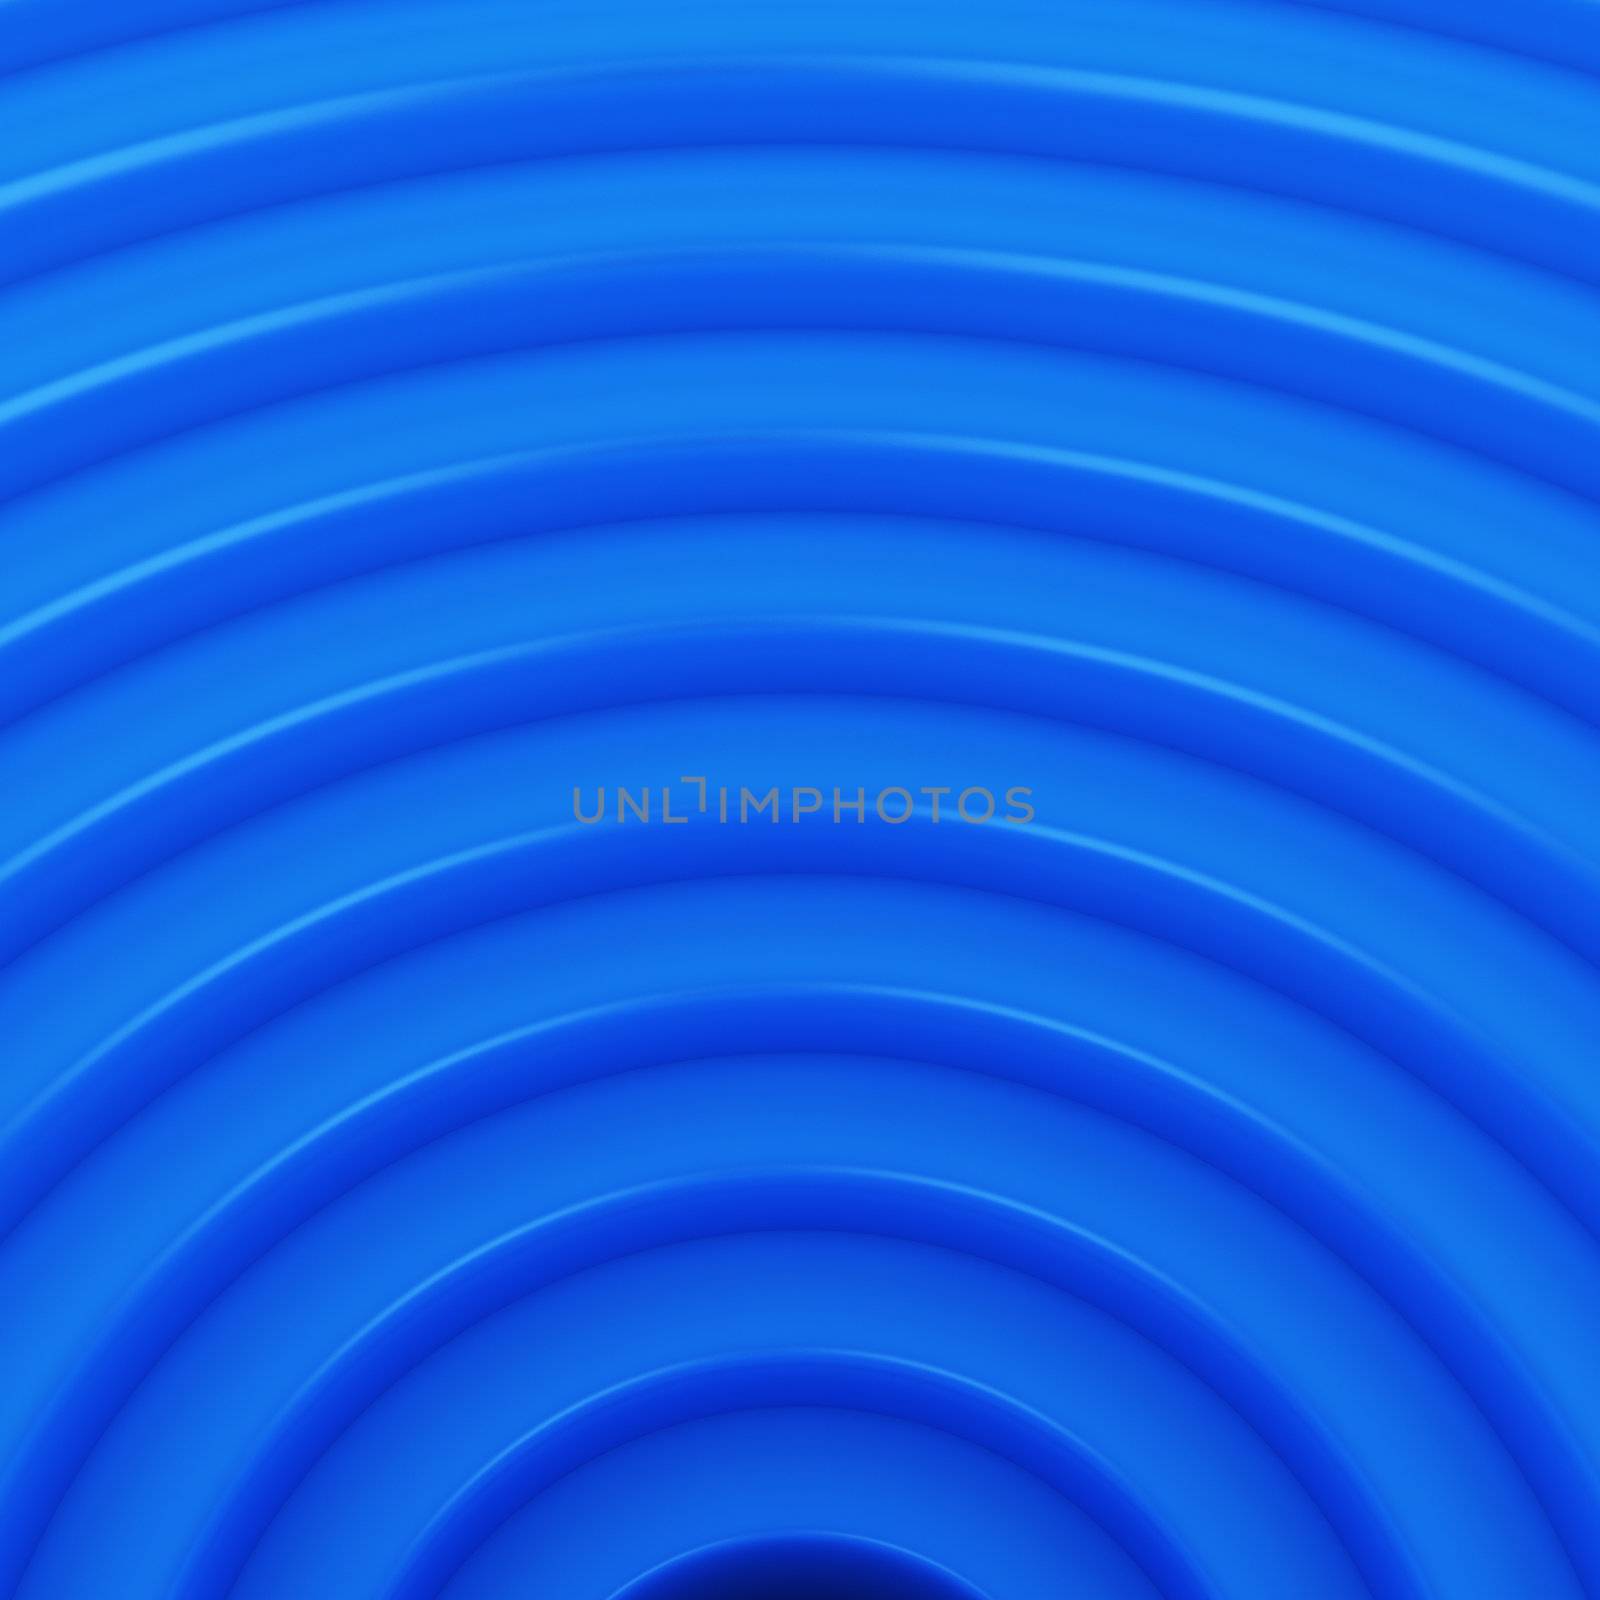 Blue arcs design, geometric background